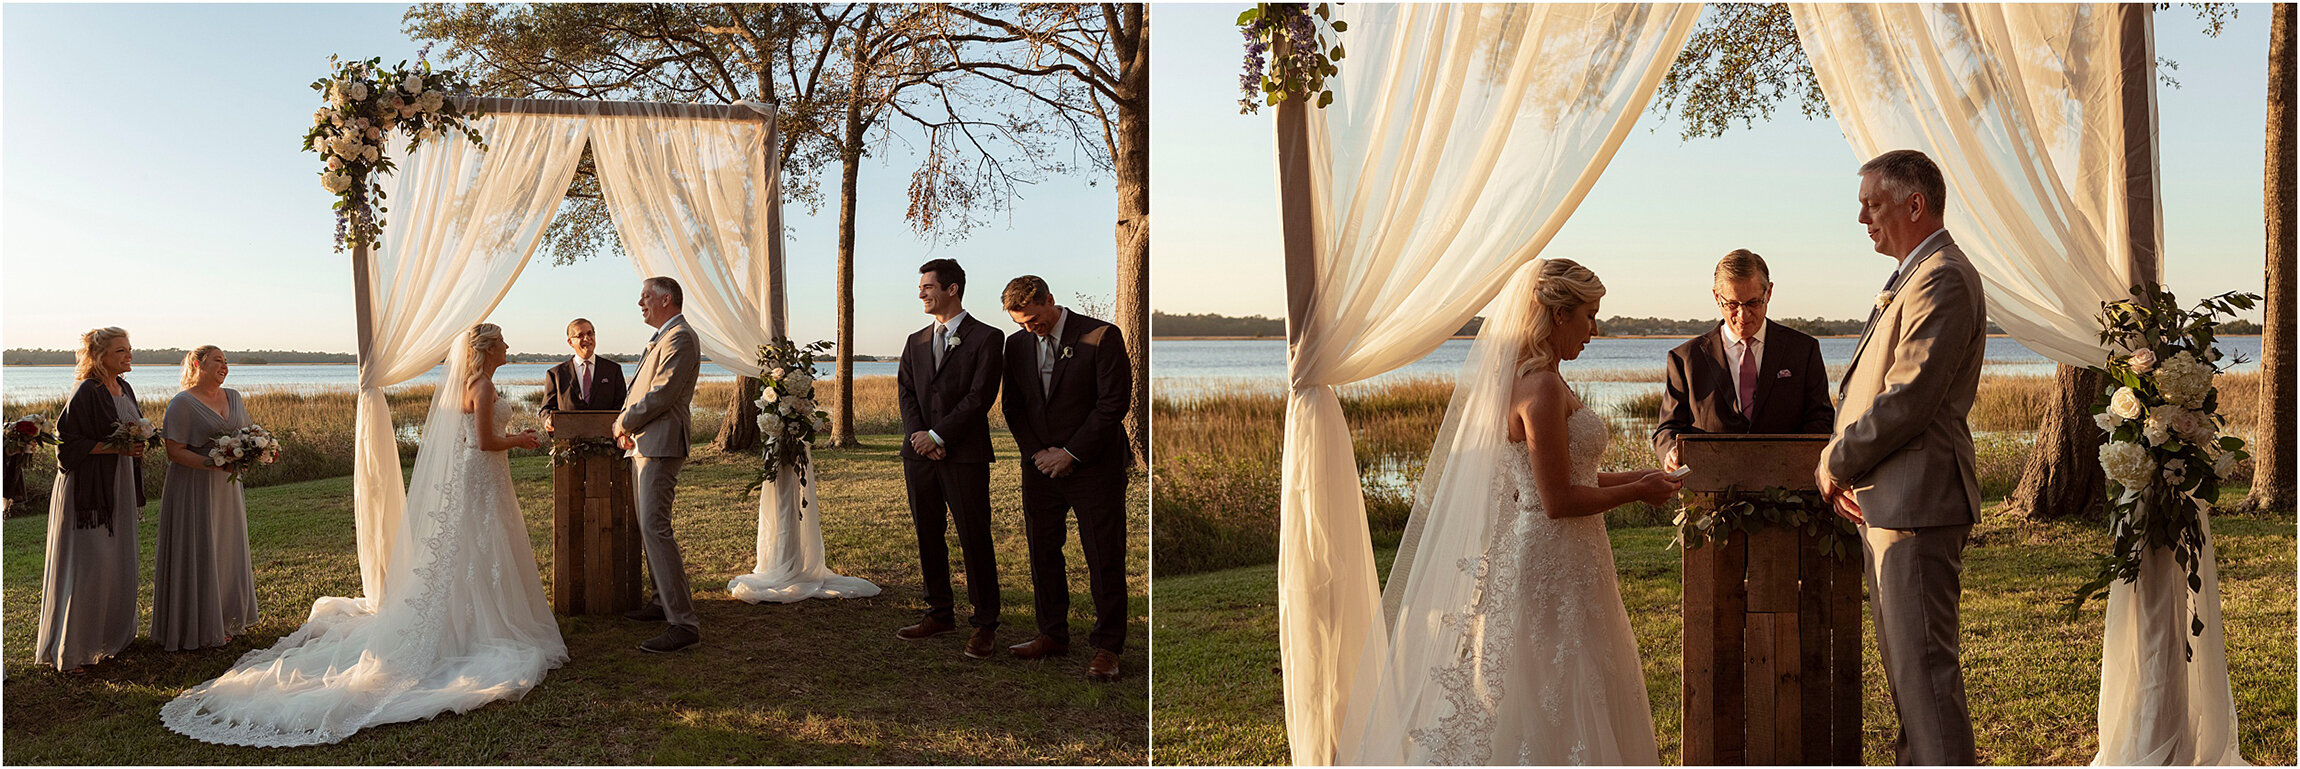 ©FianderFoto_Charleston South Carolina_Wedding Photographer_DD_129.jpg